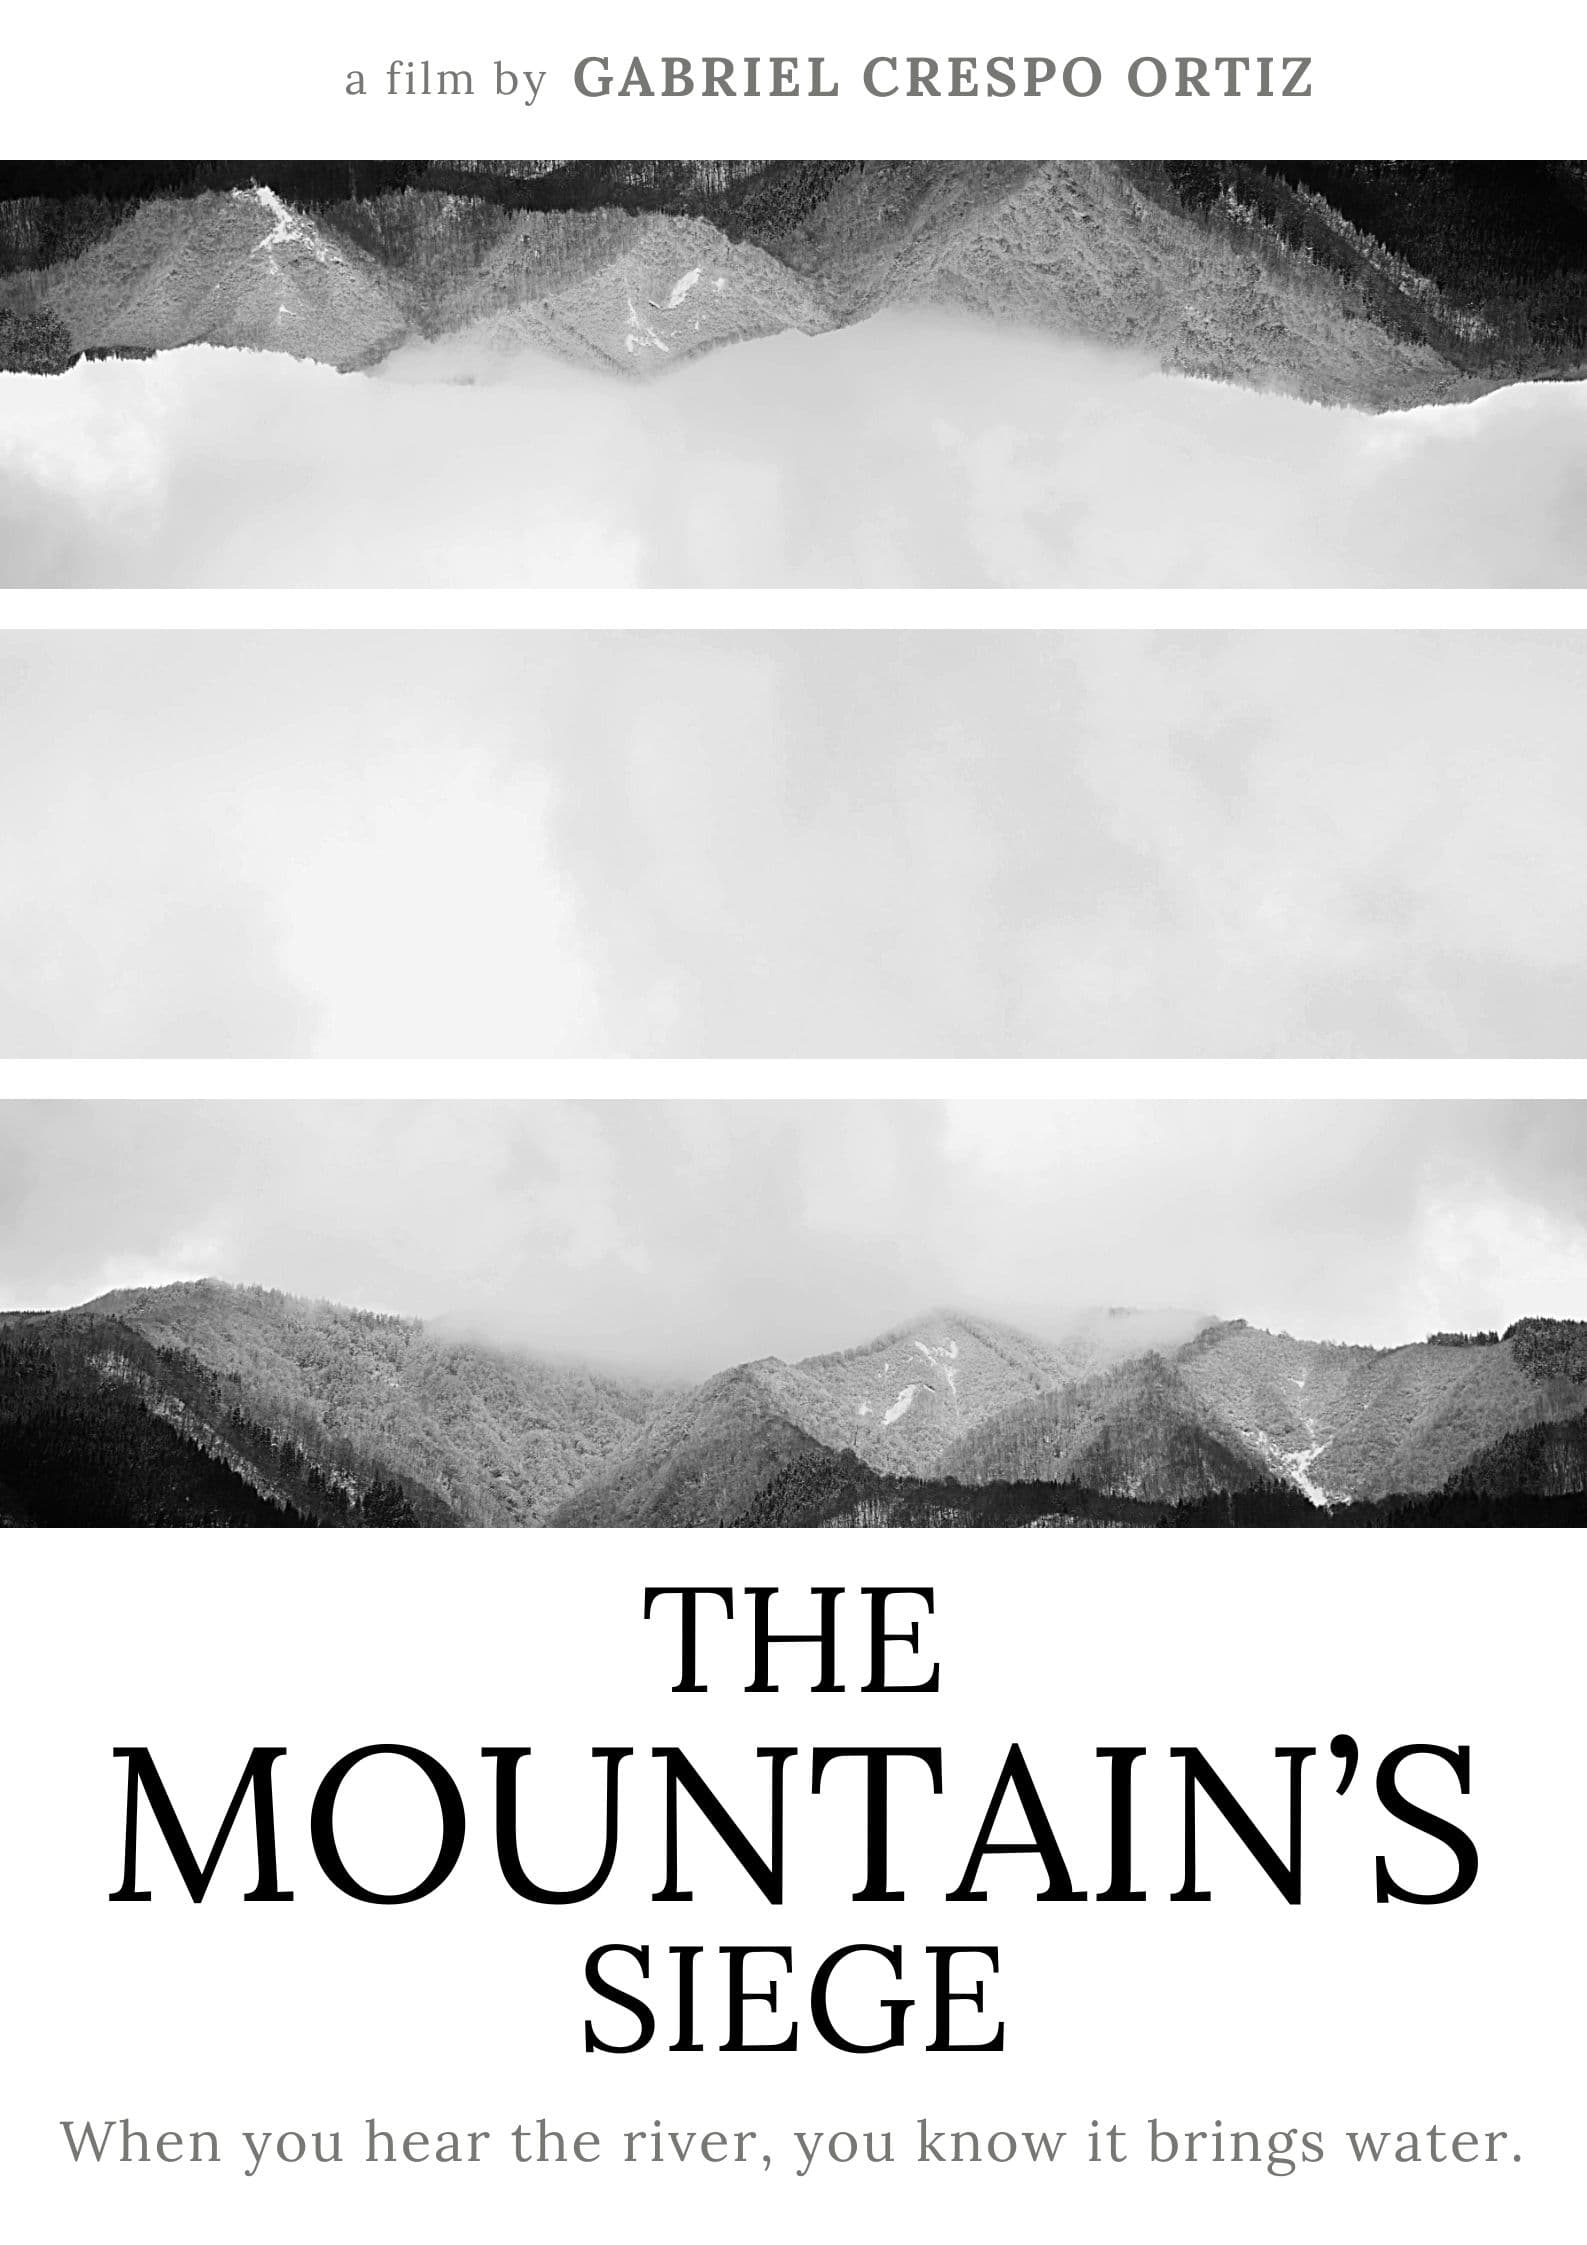 The Mountain's Siege